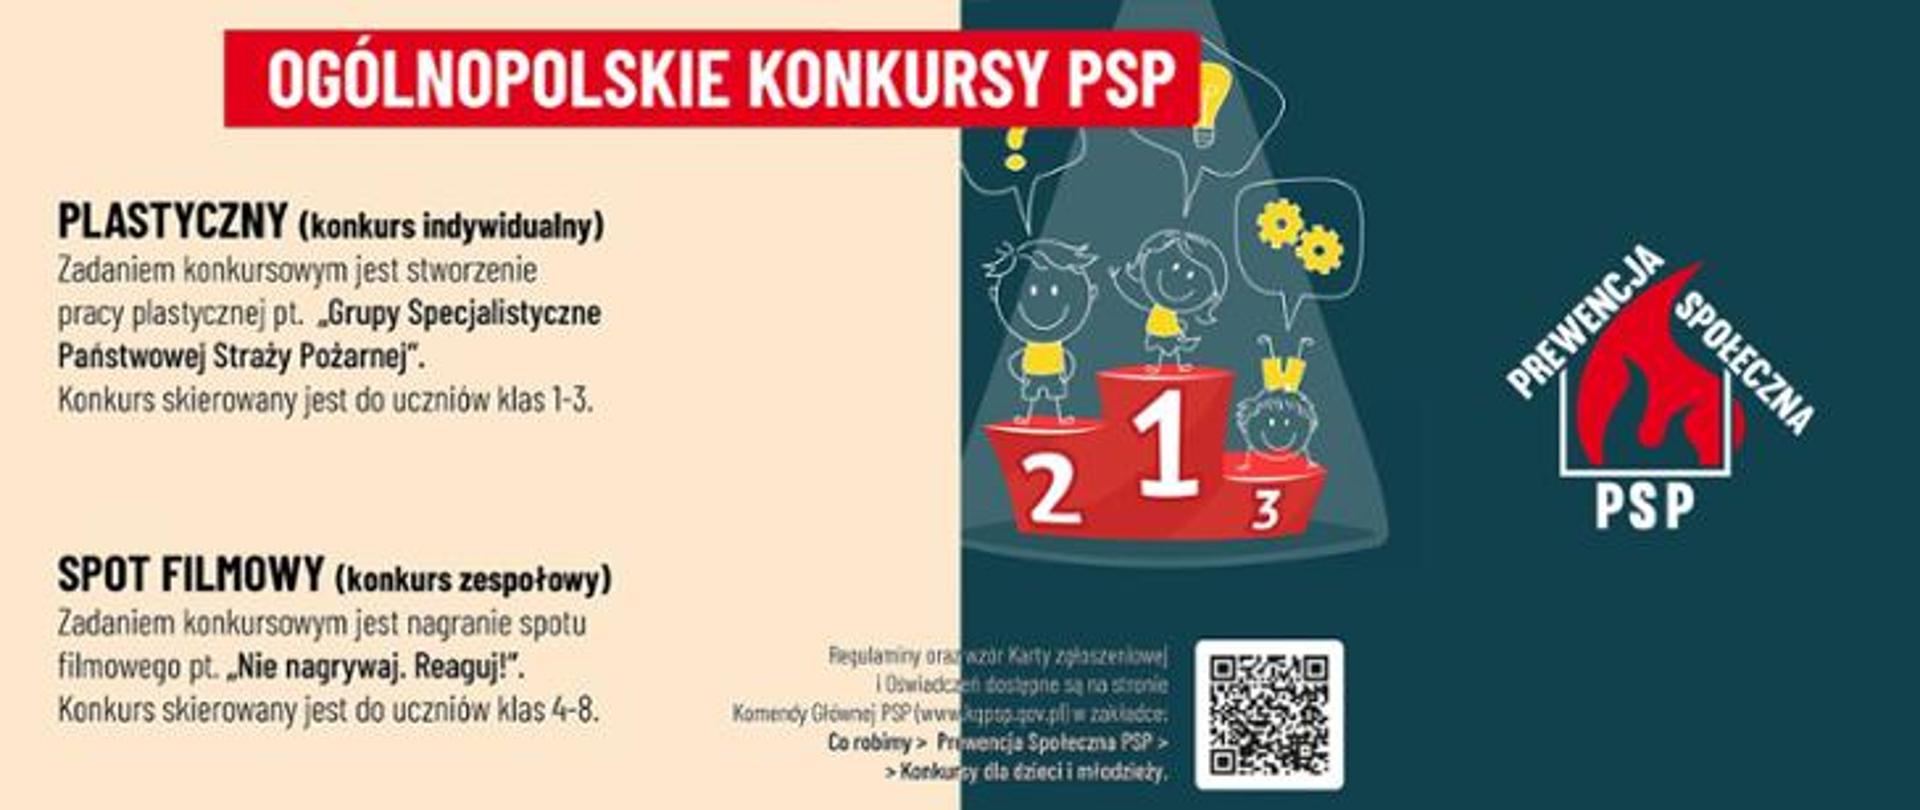 Ogólnopolskie_konkursy_PSP